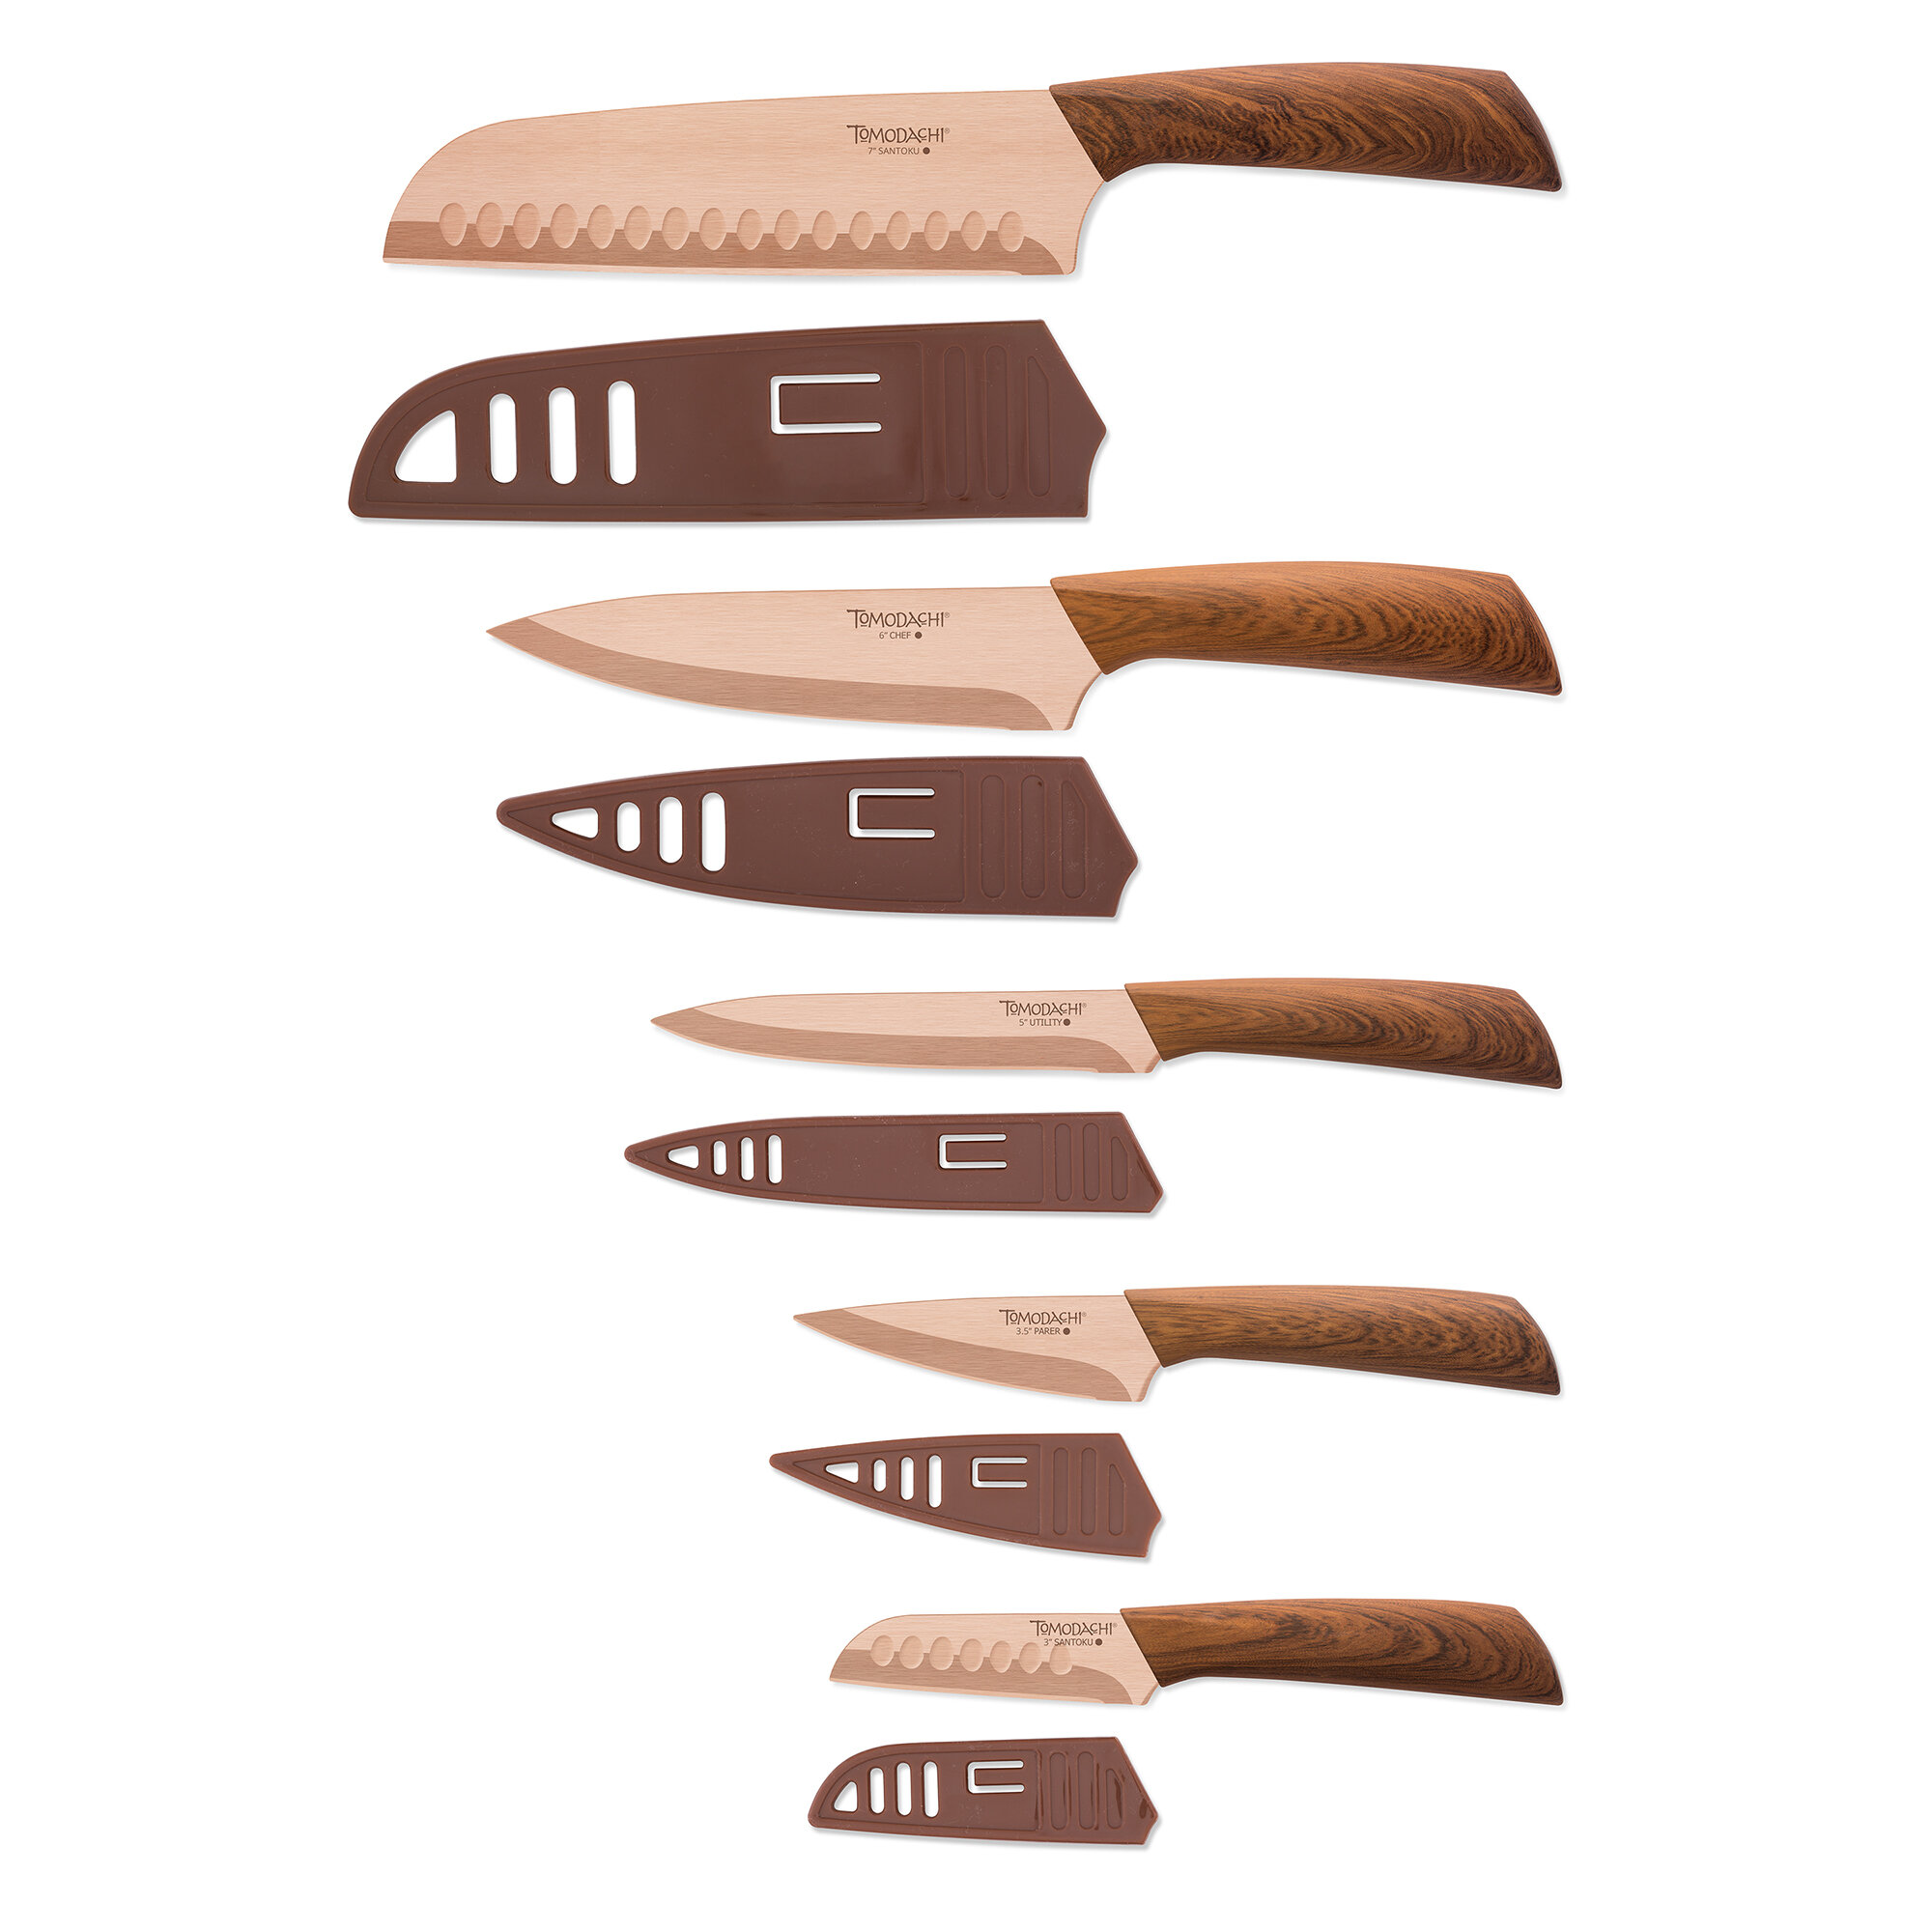 Hampton Forge Tomodachi Fuji 15-Piece Knife Block Set